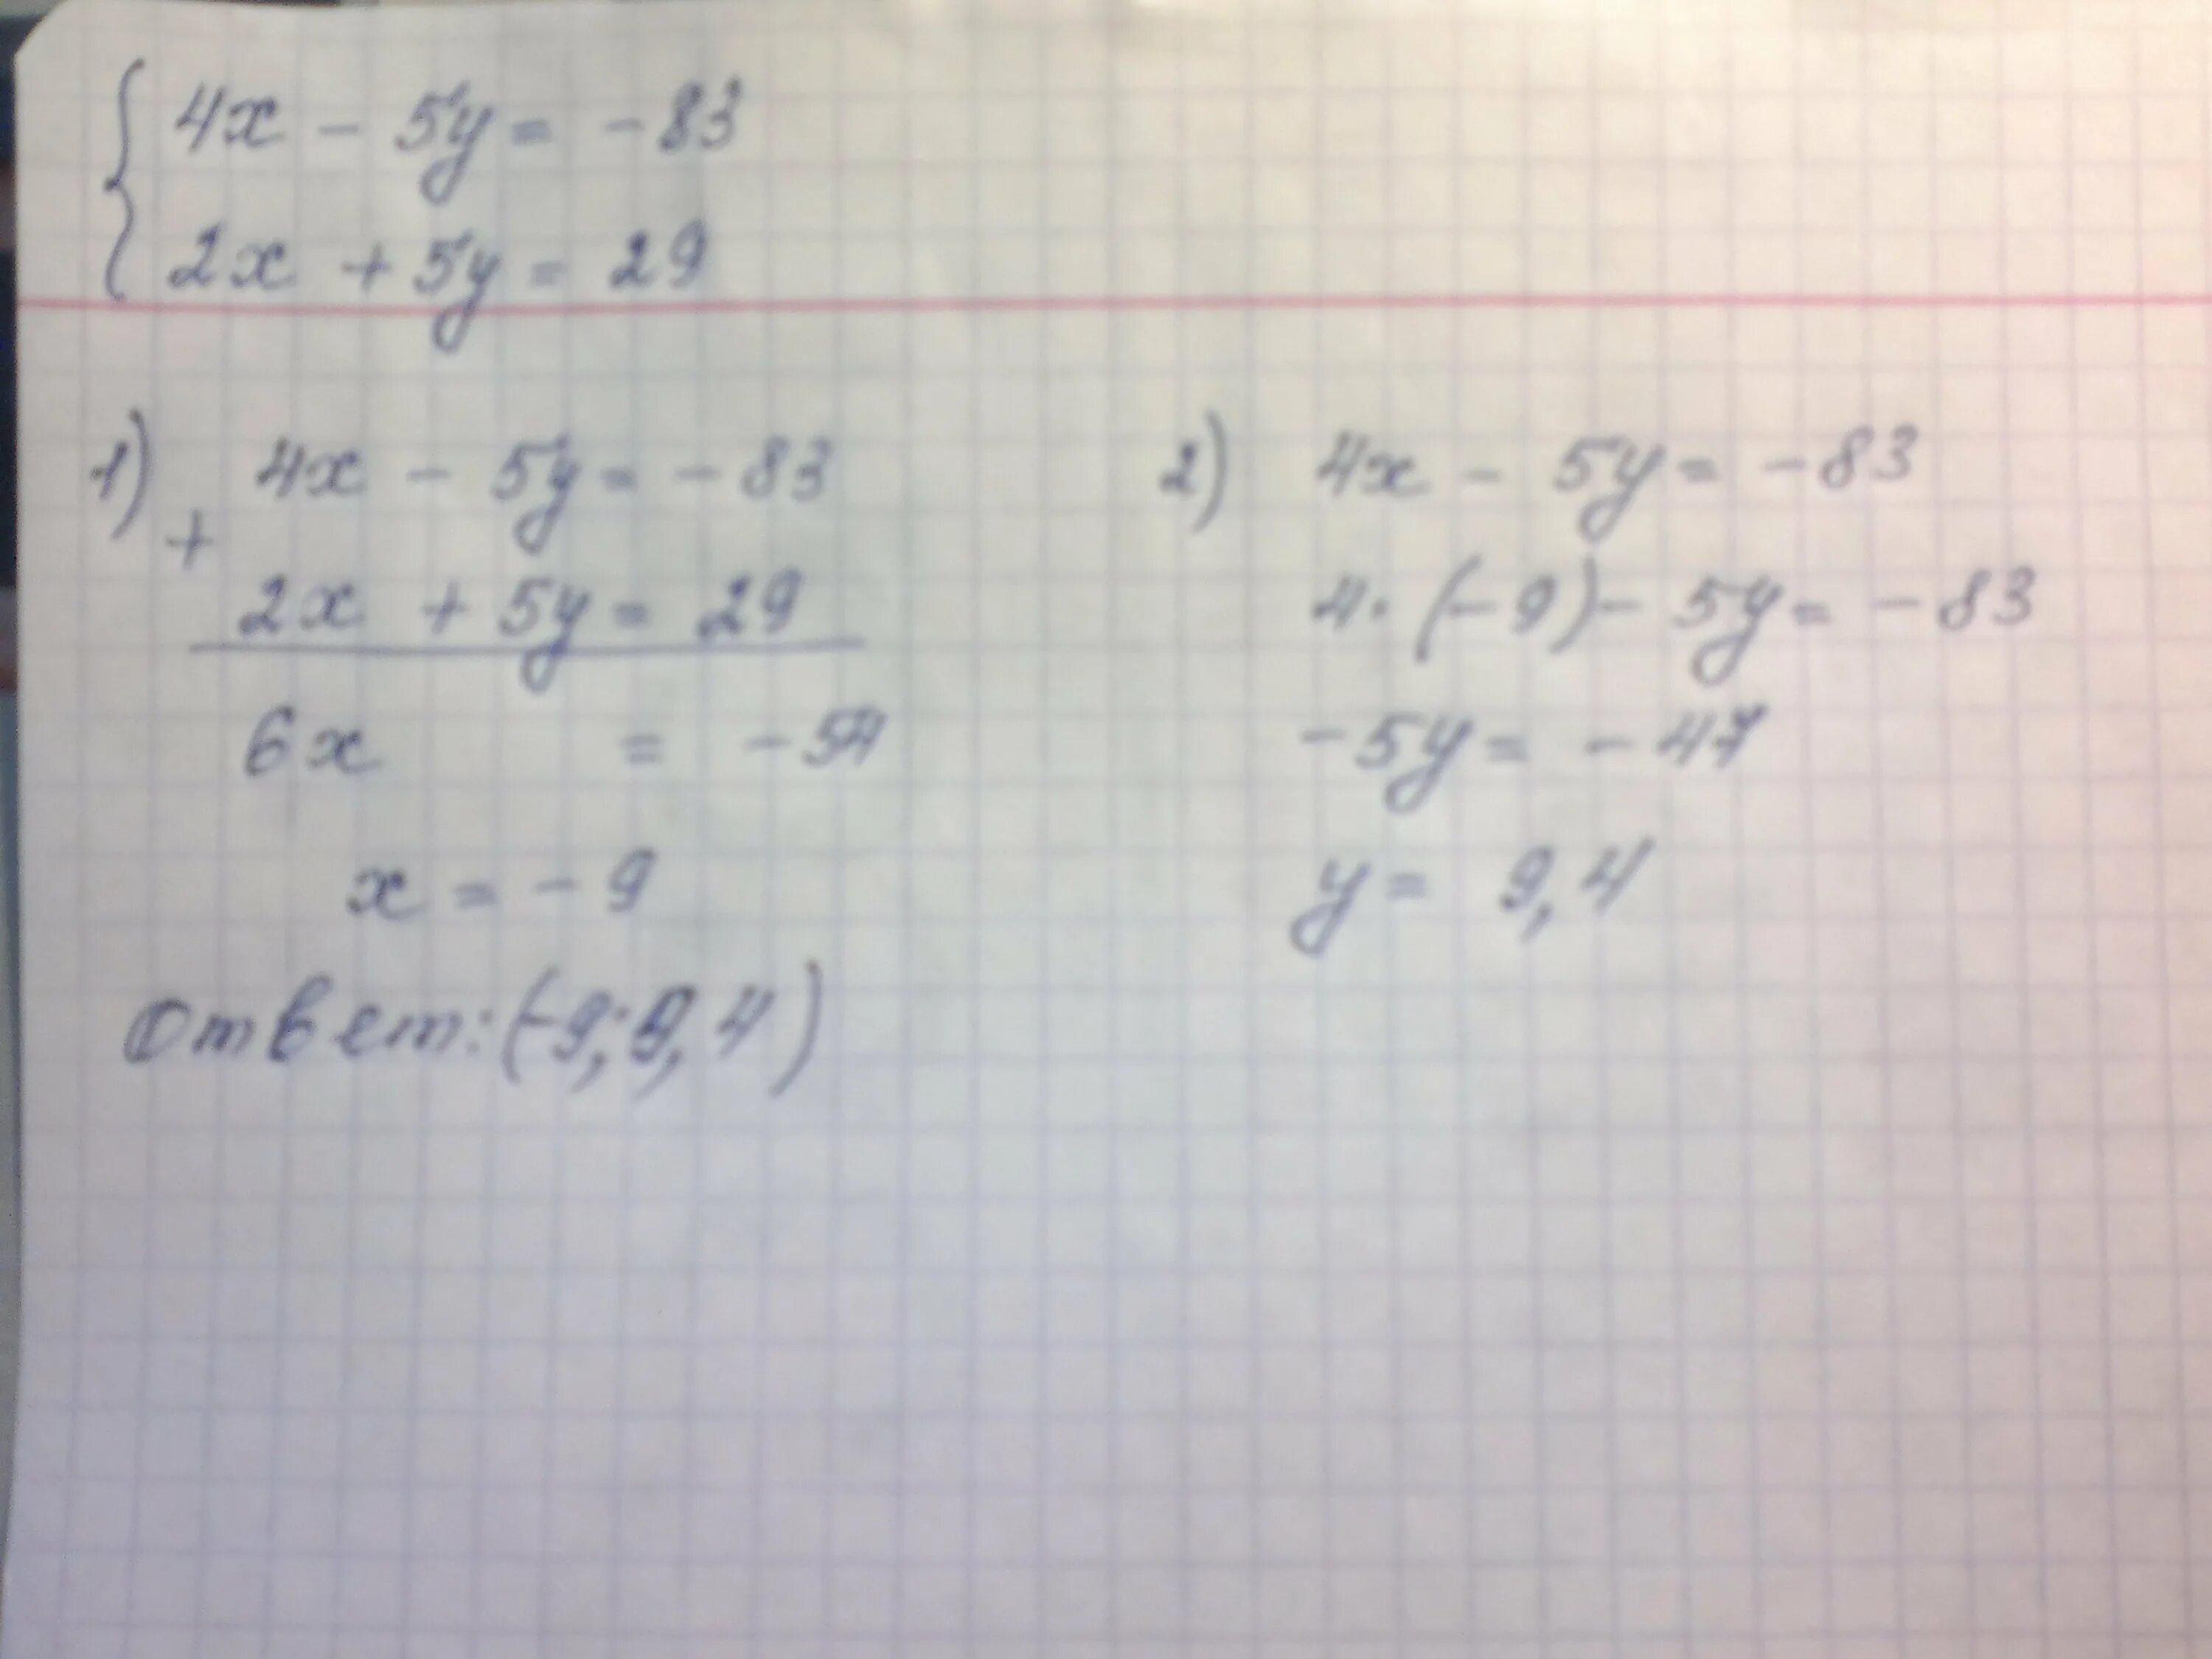 5x 3y 10 7. Решите методом сложения систему уравнений 4x-5y -83. Решите методом сложения систему уравнений 4x-5y -83 2x+5y 29. Решите методом сложения систему уравнения 4 x. 4x-5y=-83 2x+5y=29.